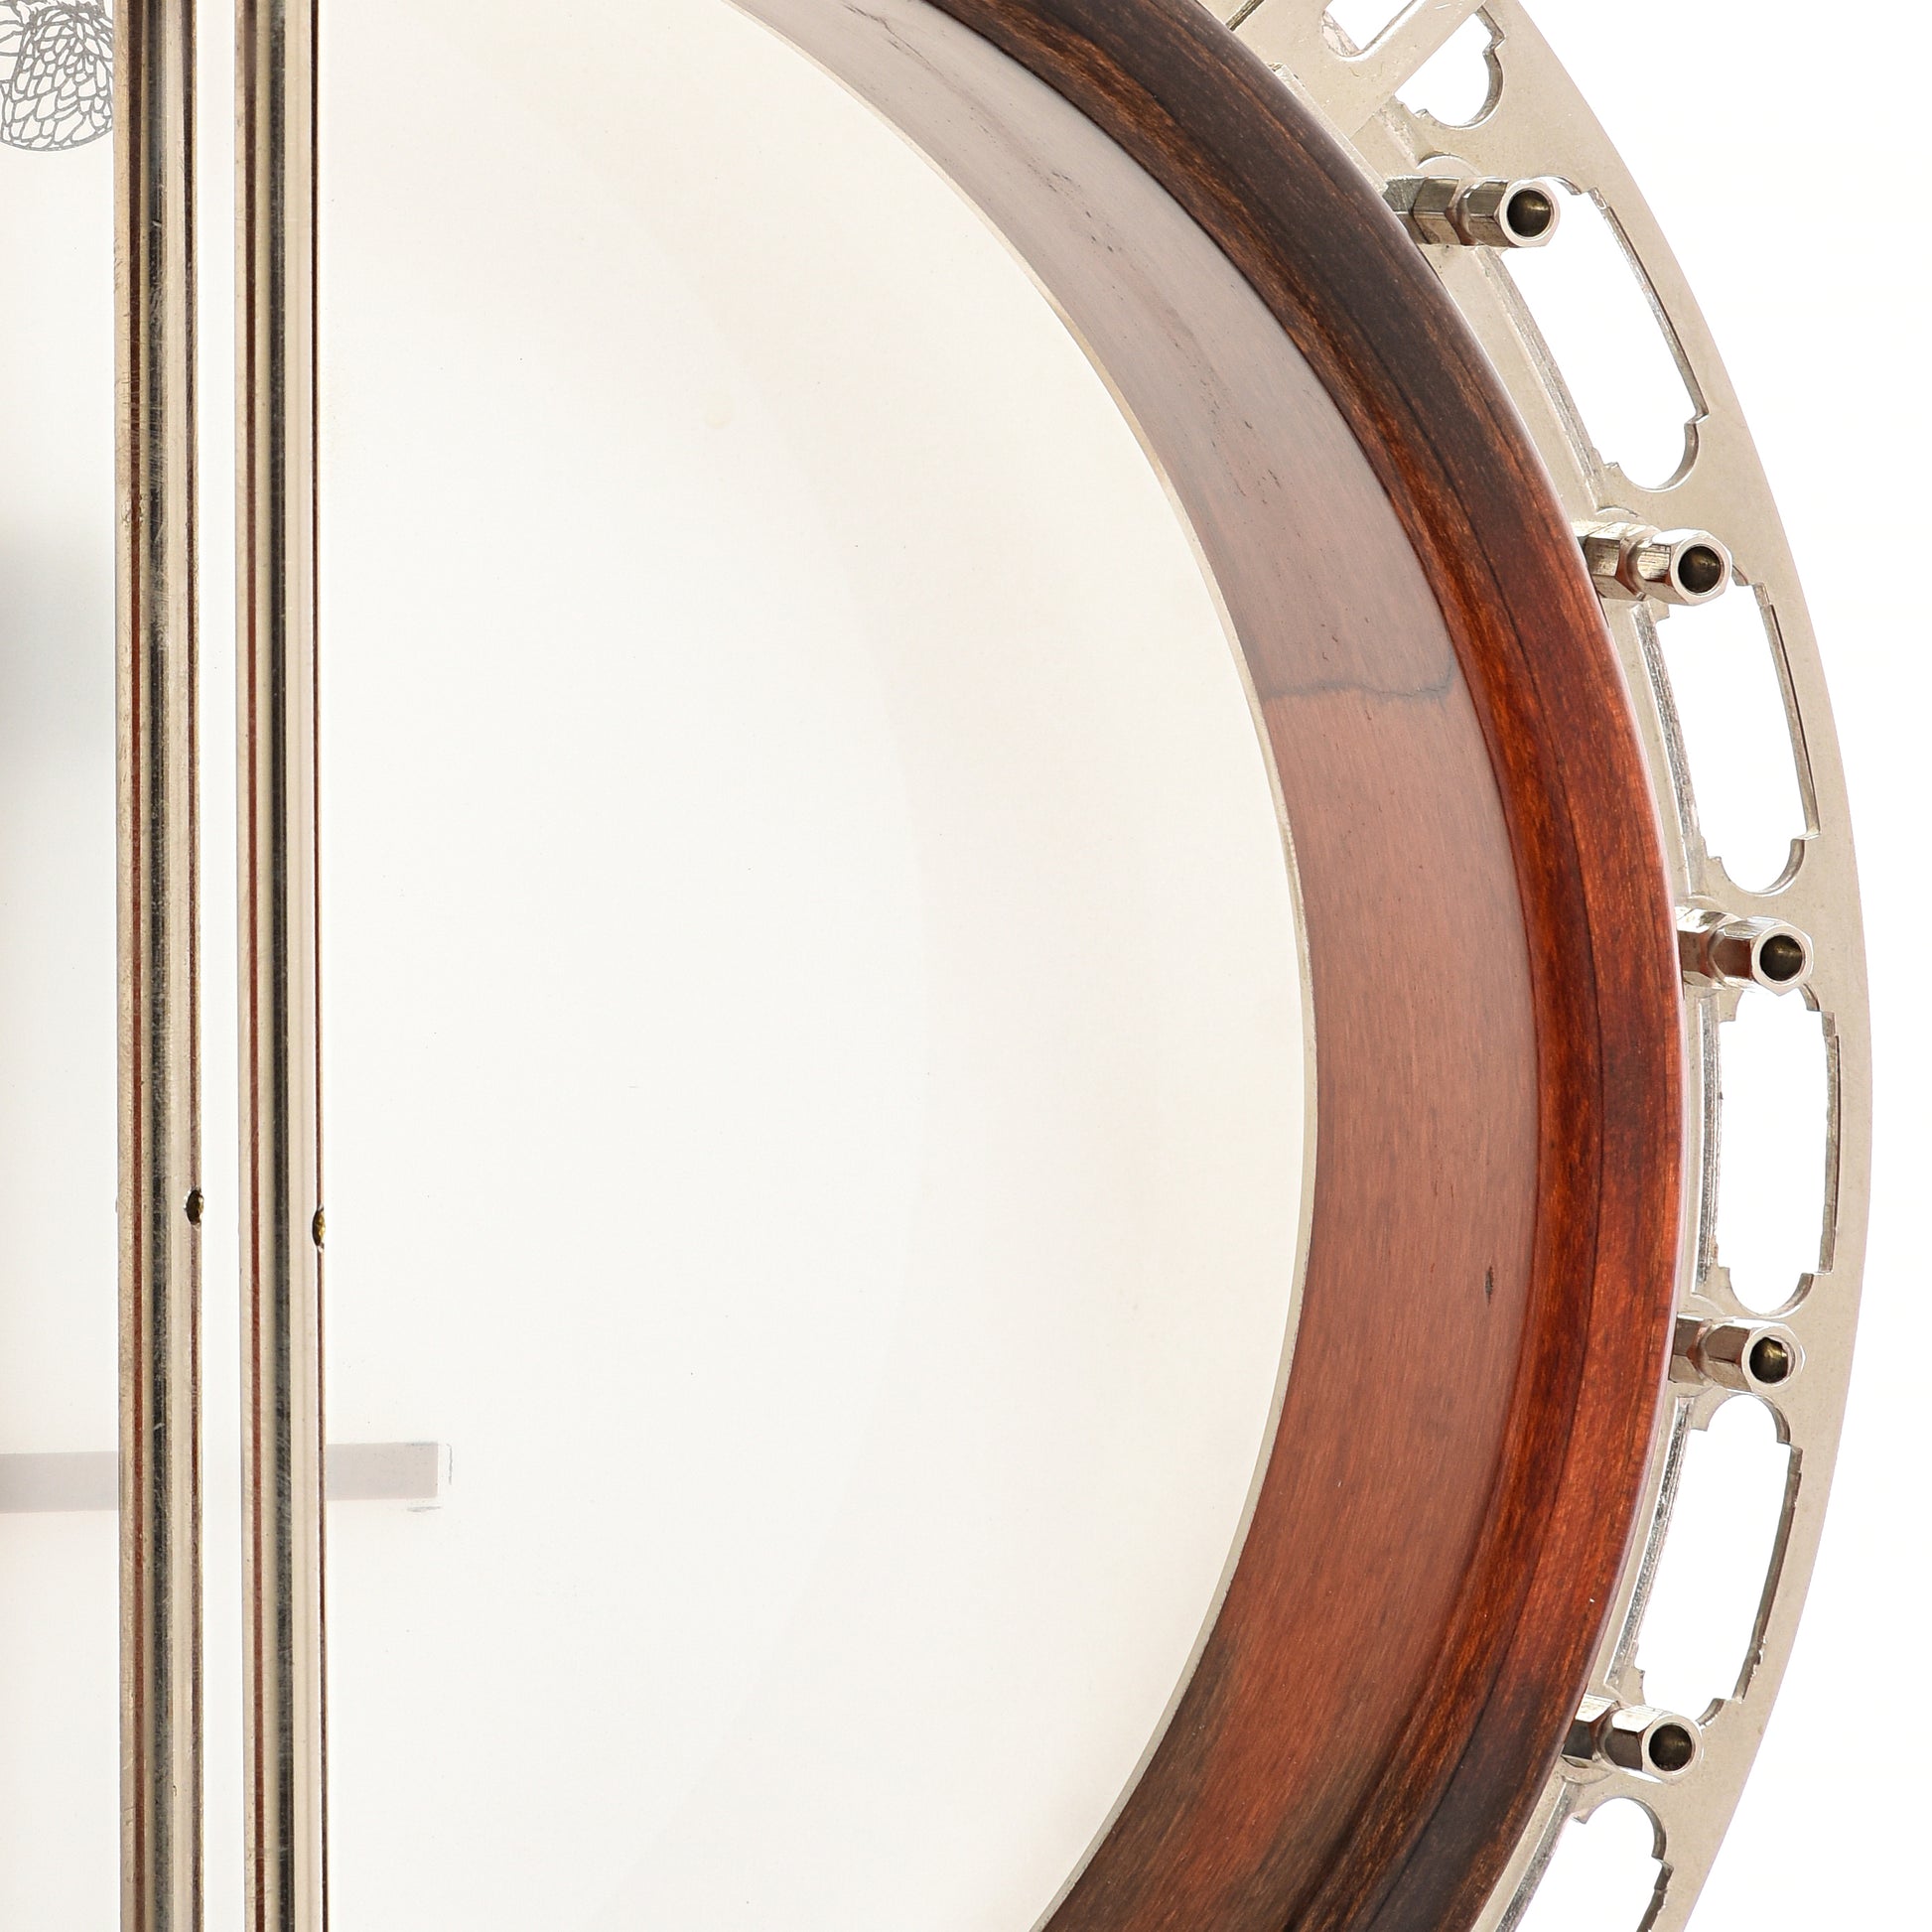 Inside rim of Deering Golden Era Resonator Banjo (1998)